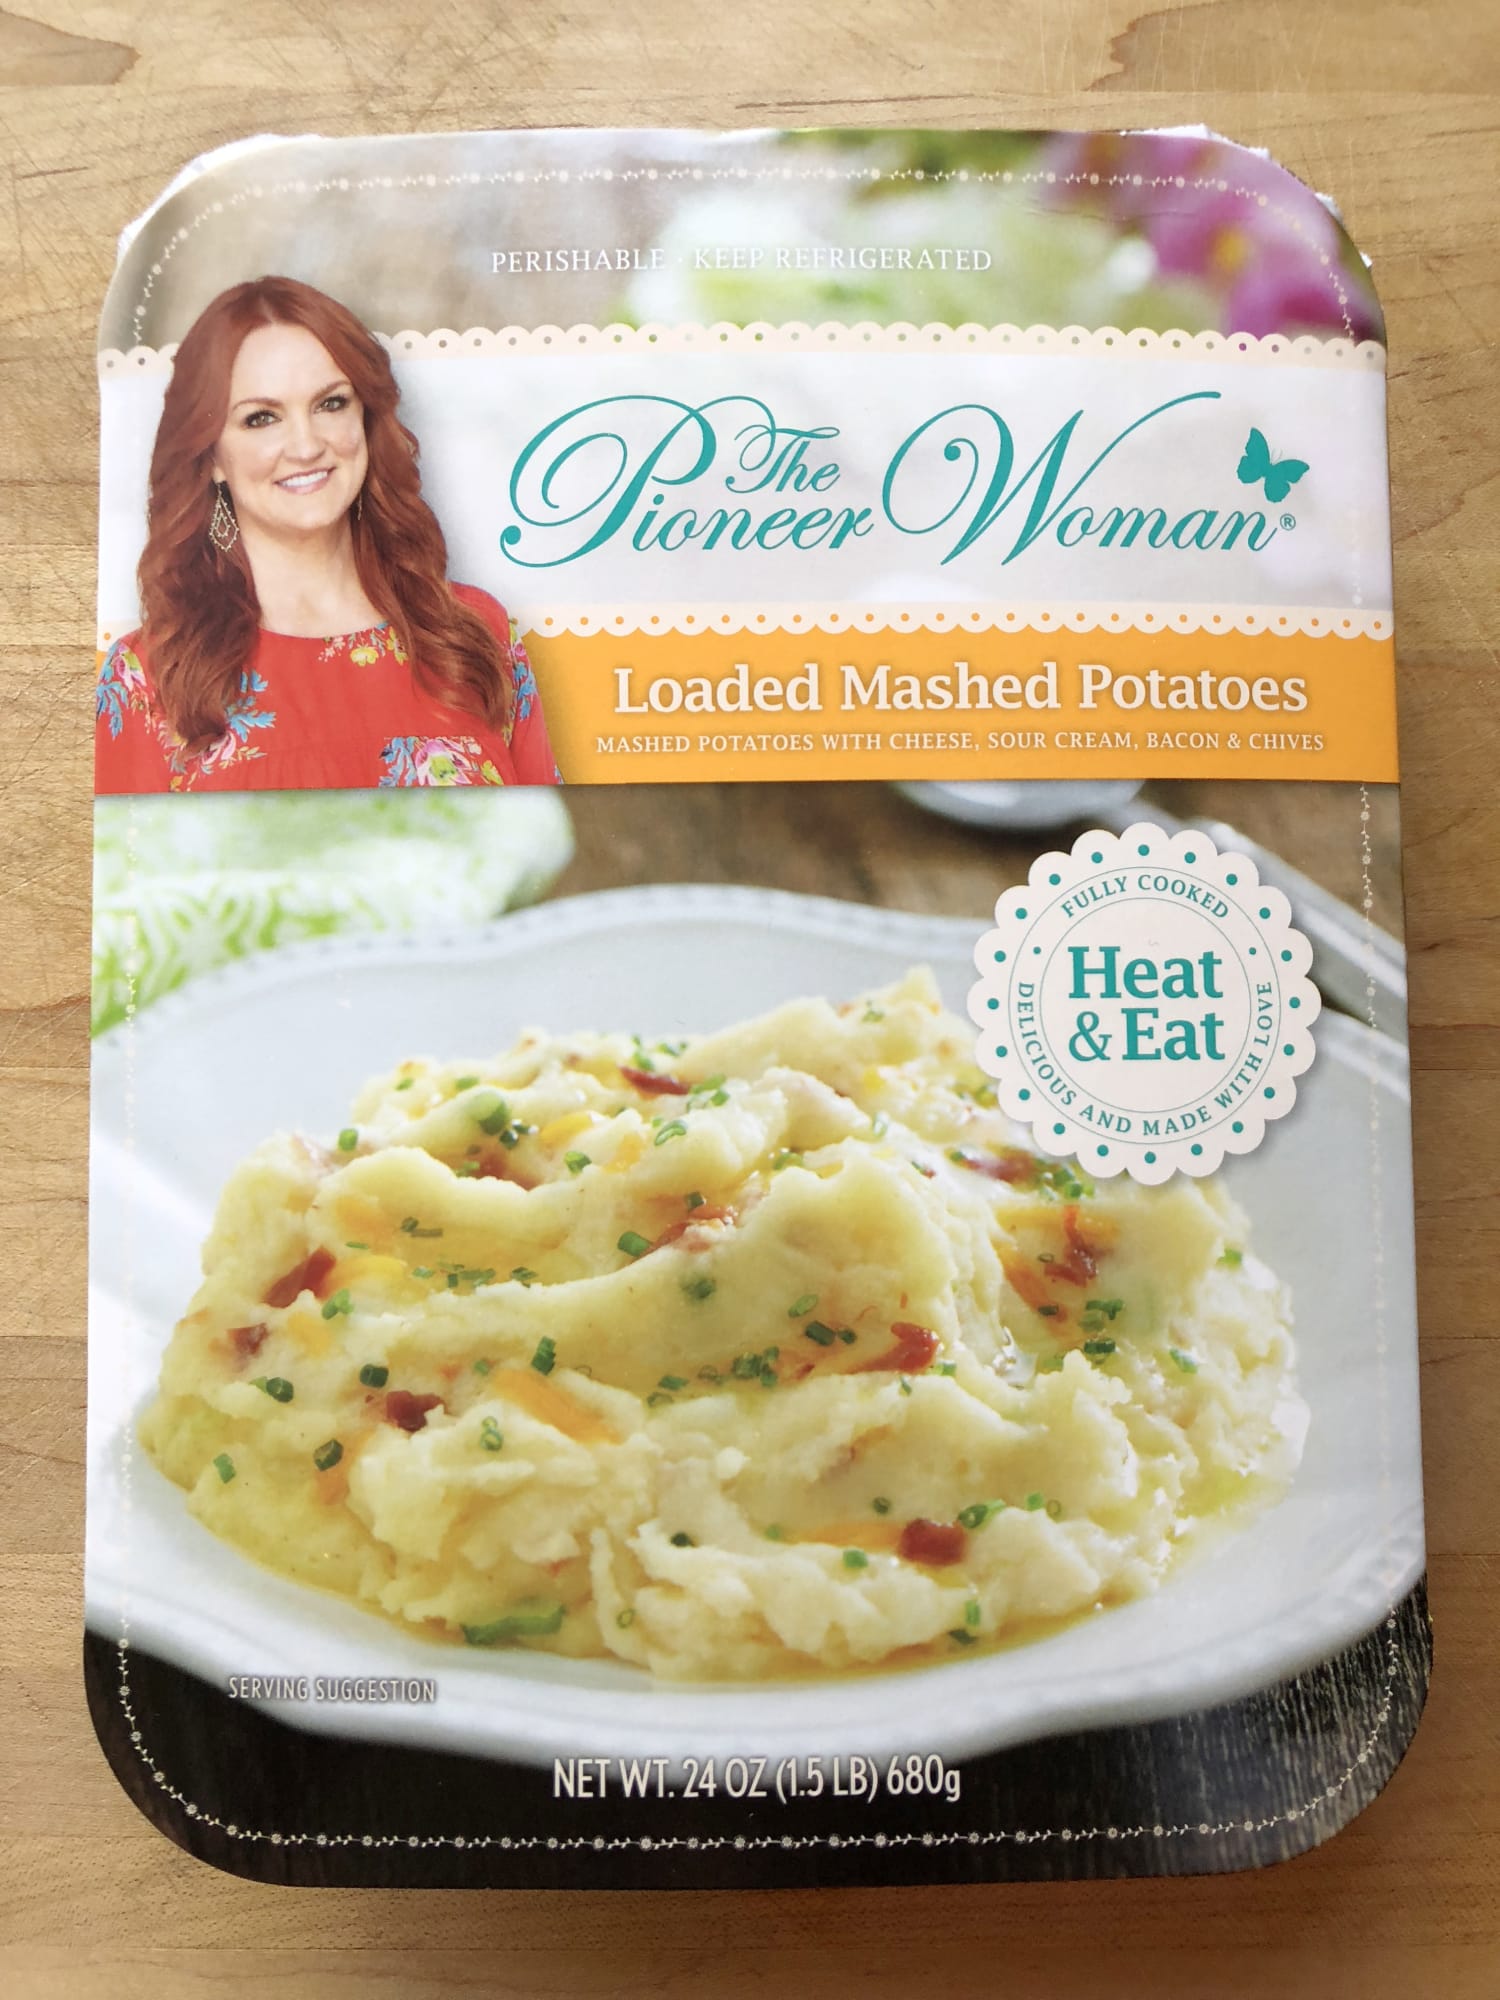 https://media-cldnry.s-nbcnews.com/image/upload/newscms/2018_44/1382440/pioneer_woman_loaded_mashed_potatoes-pioneer_woman_prepared_food_line-181101.jpg